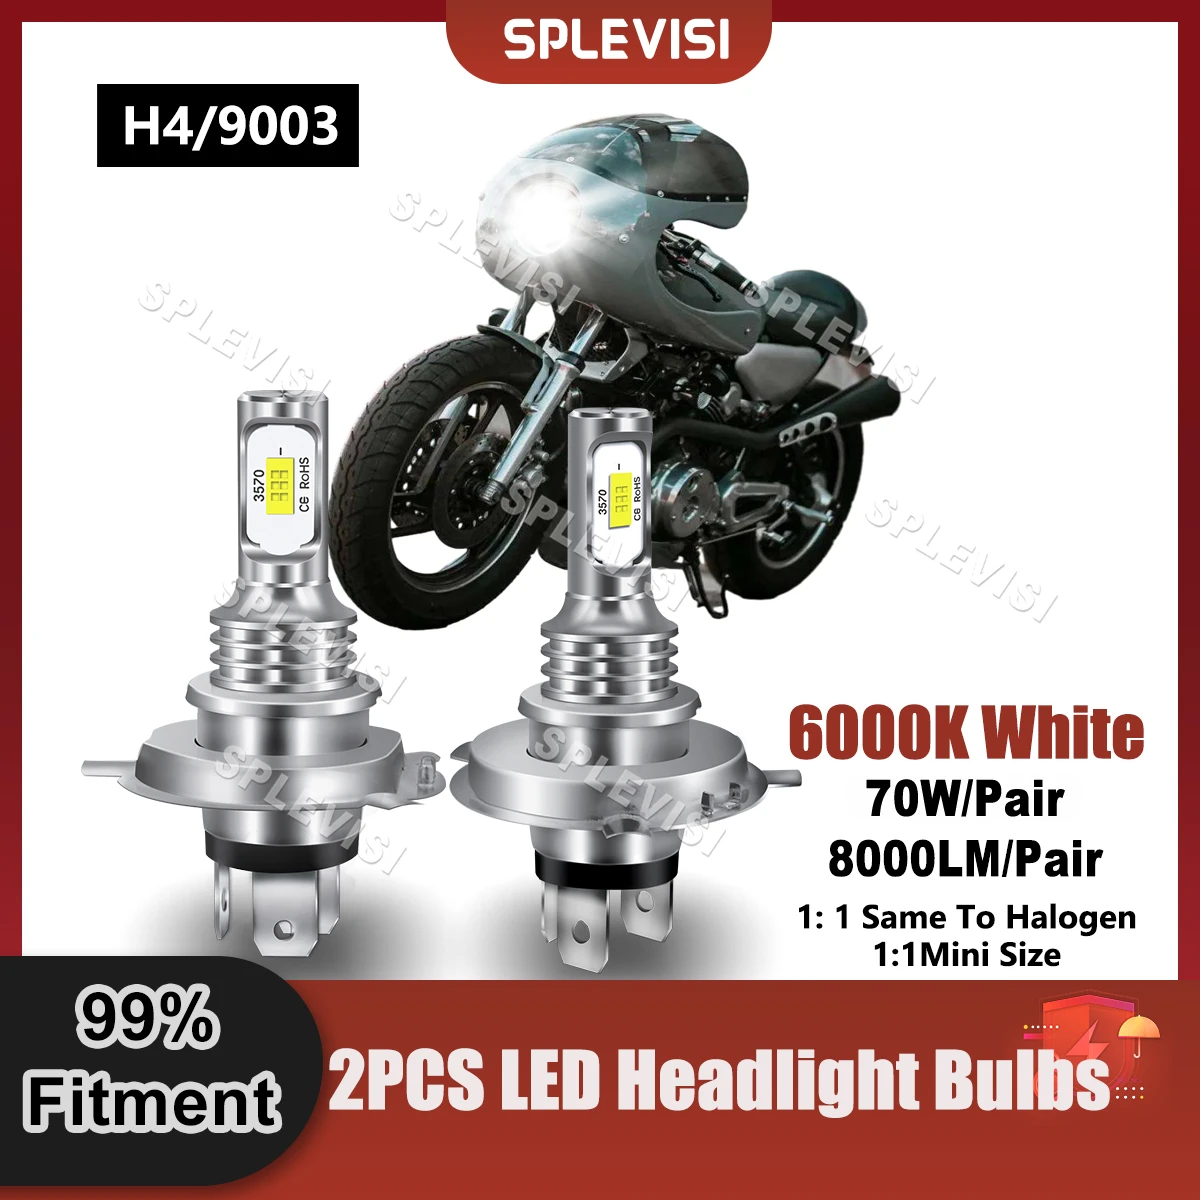 

2PCS H4/9003 LED Headlight Bulbs Compatible 9V-24V 8000LM 70W For Yamaha Virago 700 1984 1985 1986 1987 Motorcycle Light Bulbs